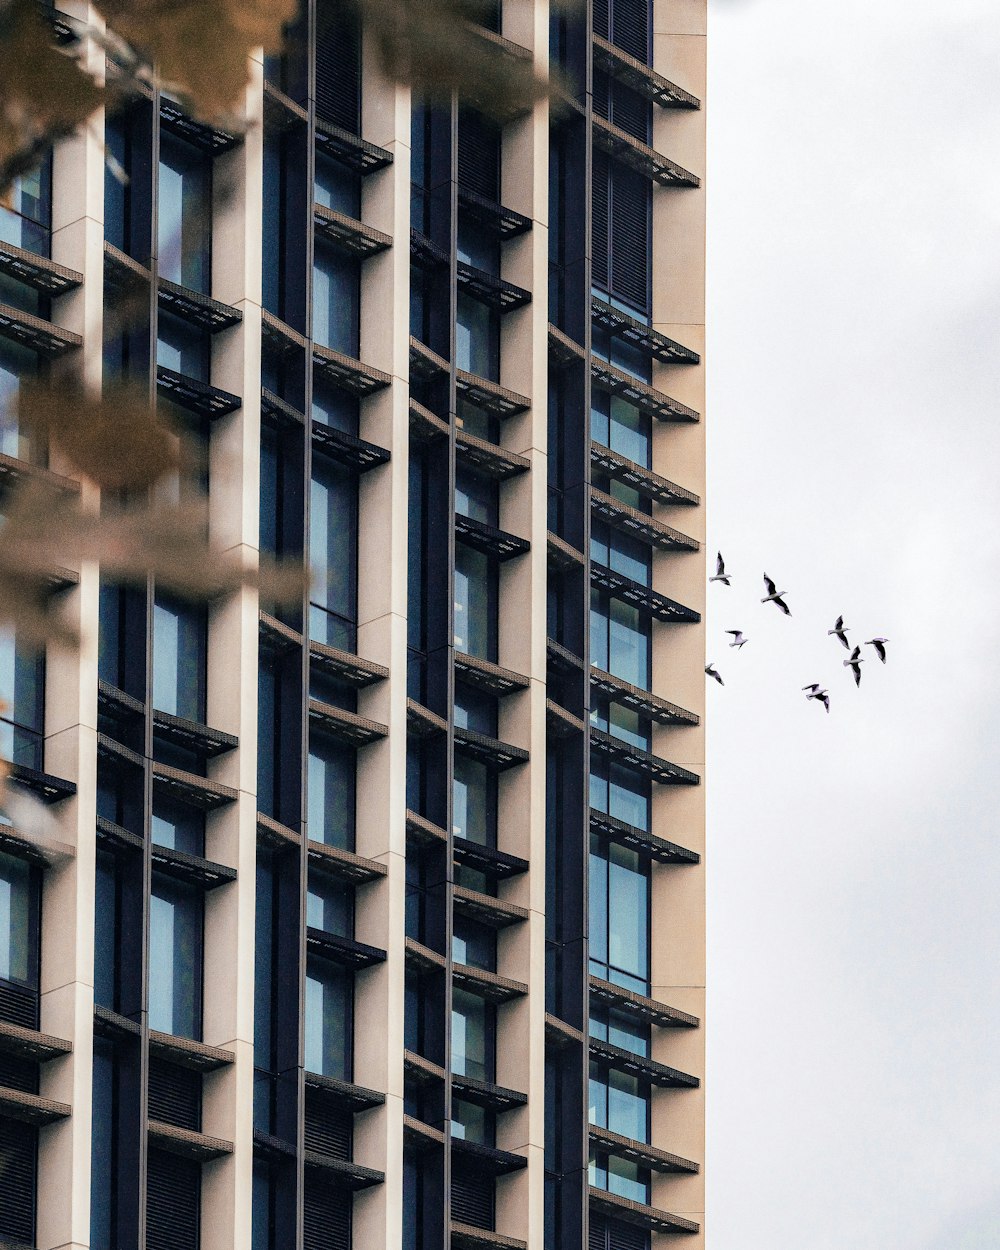 flock of bird flying near high rise building during daytime